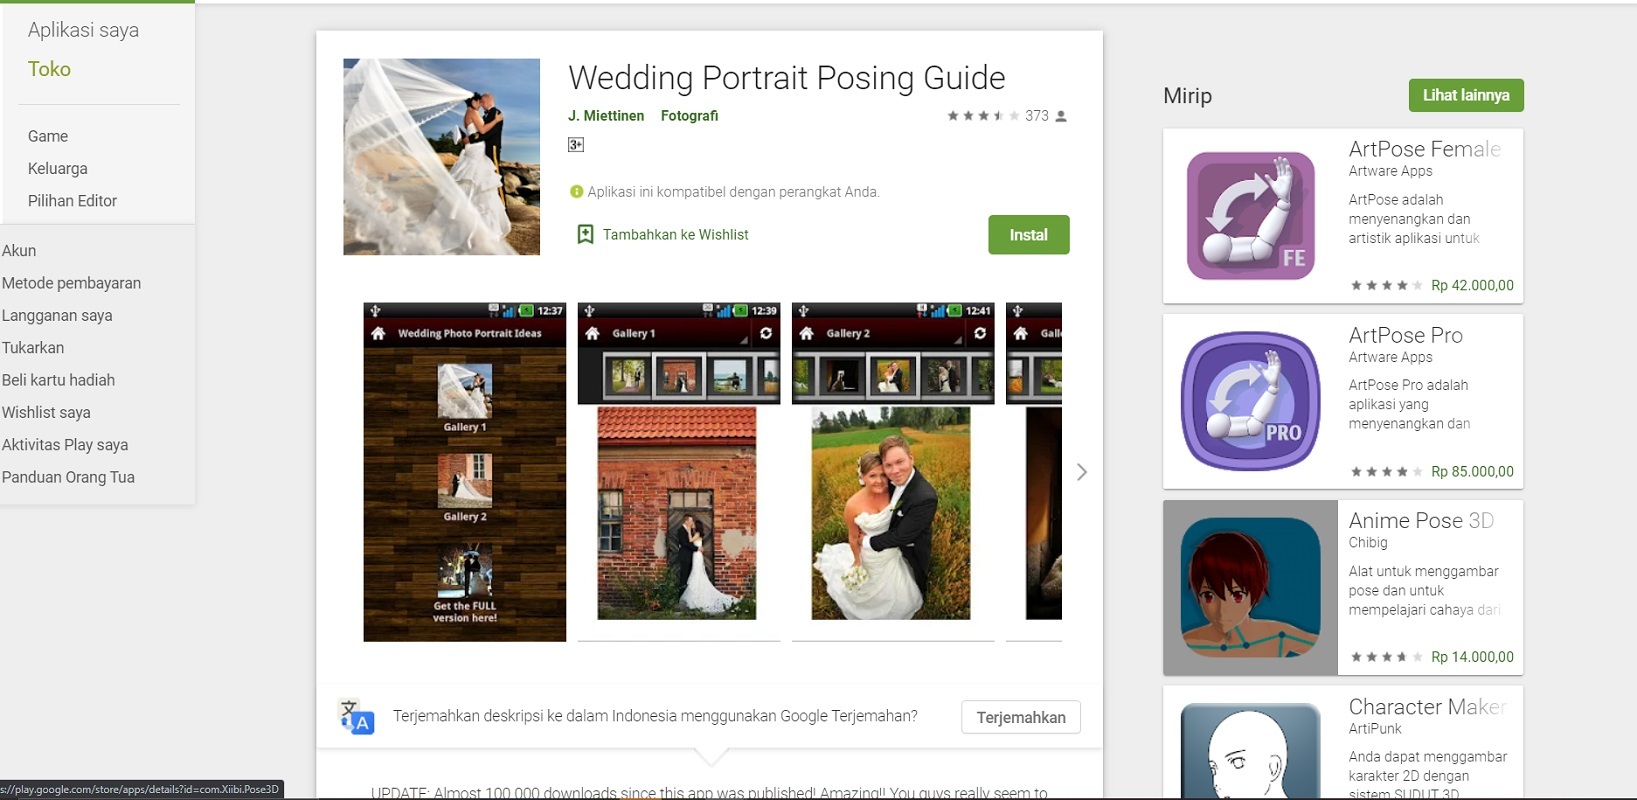 Wedding Portrait Poses Guide